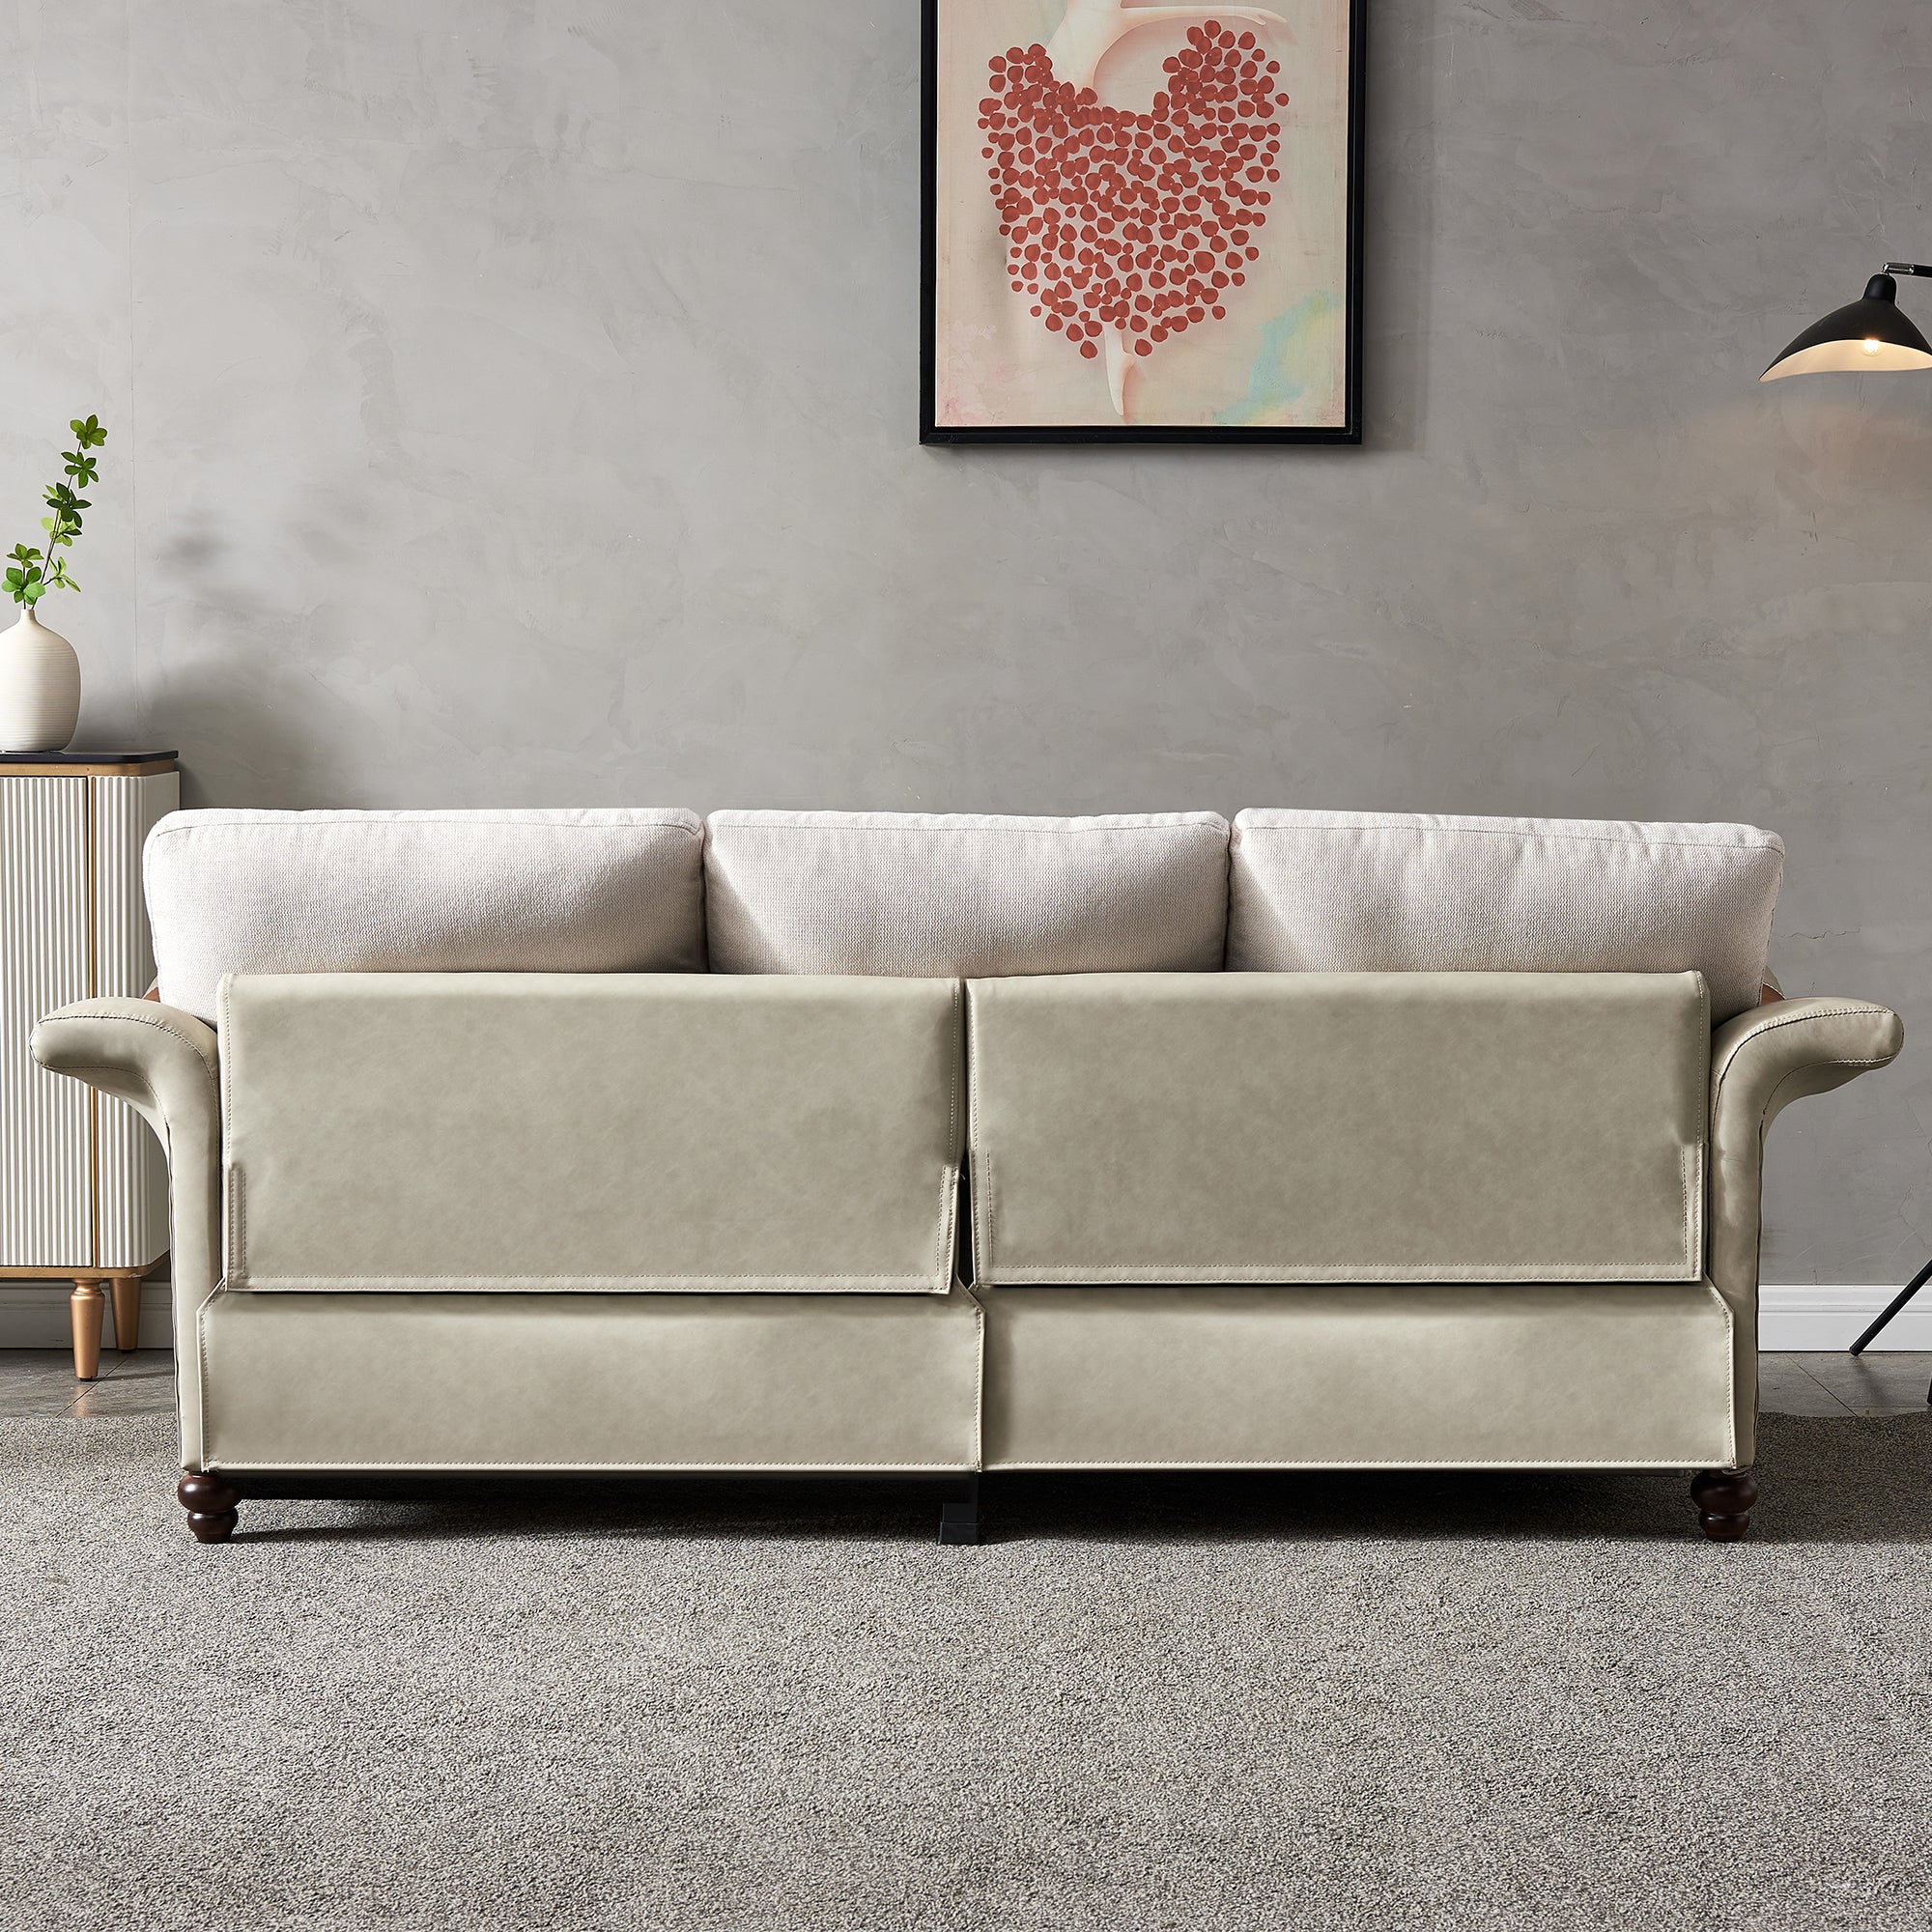 84" Corra Beige Linen Fabric Sofa with Wood Legs